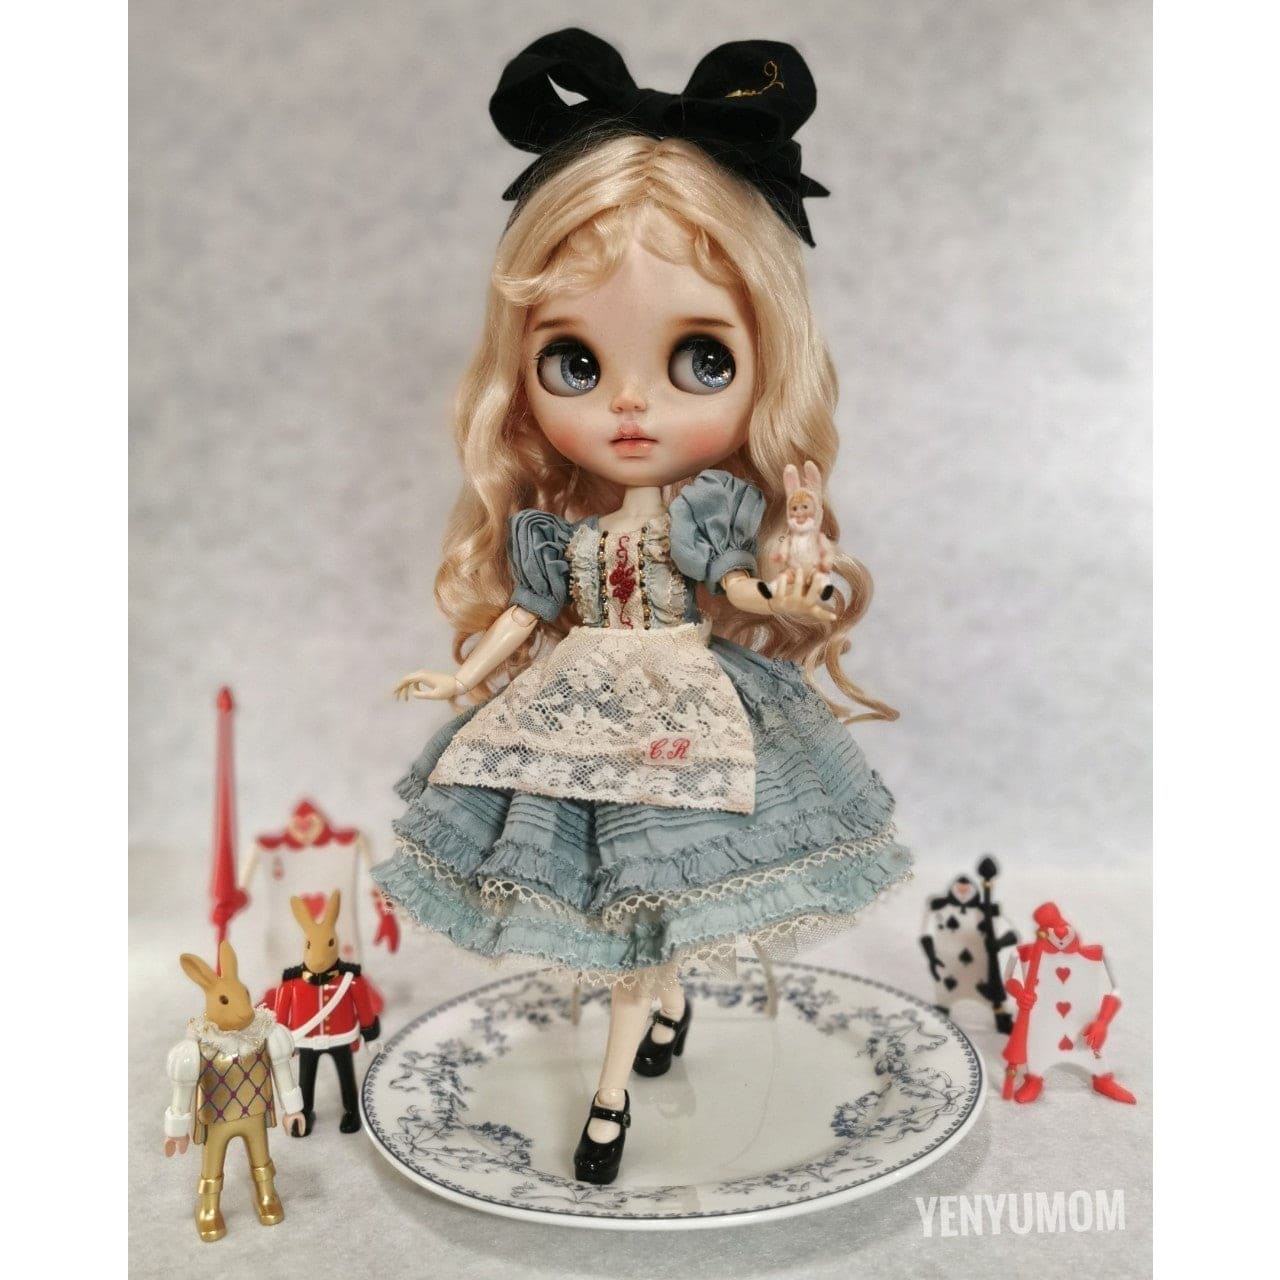 【Yenyumom】Alice Embroidery Dress Set / Neo Blythe momoko doll OB24